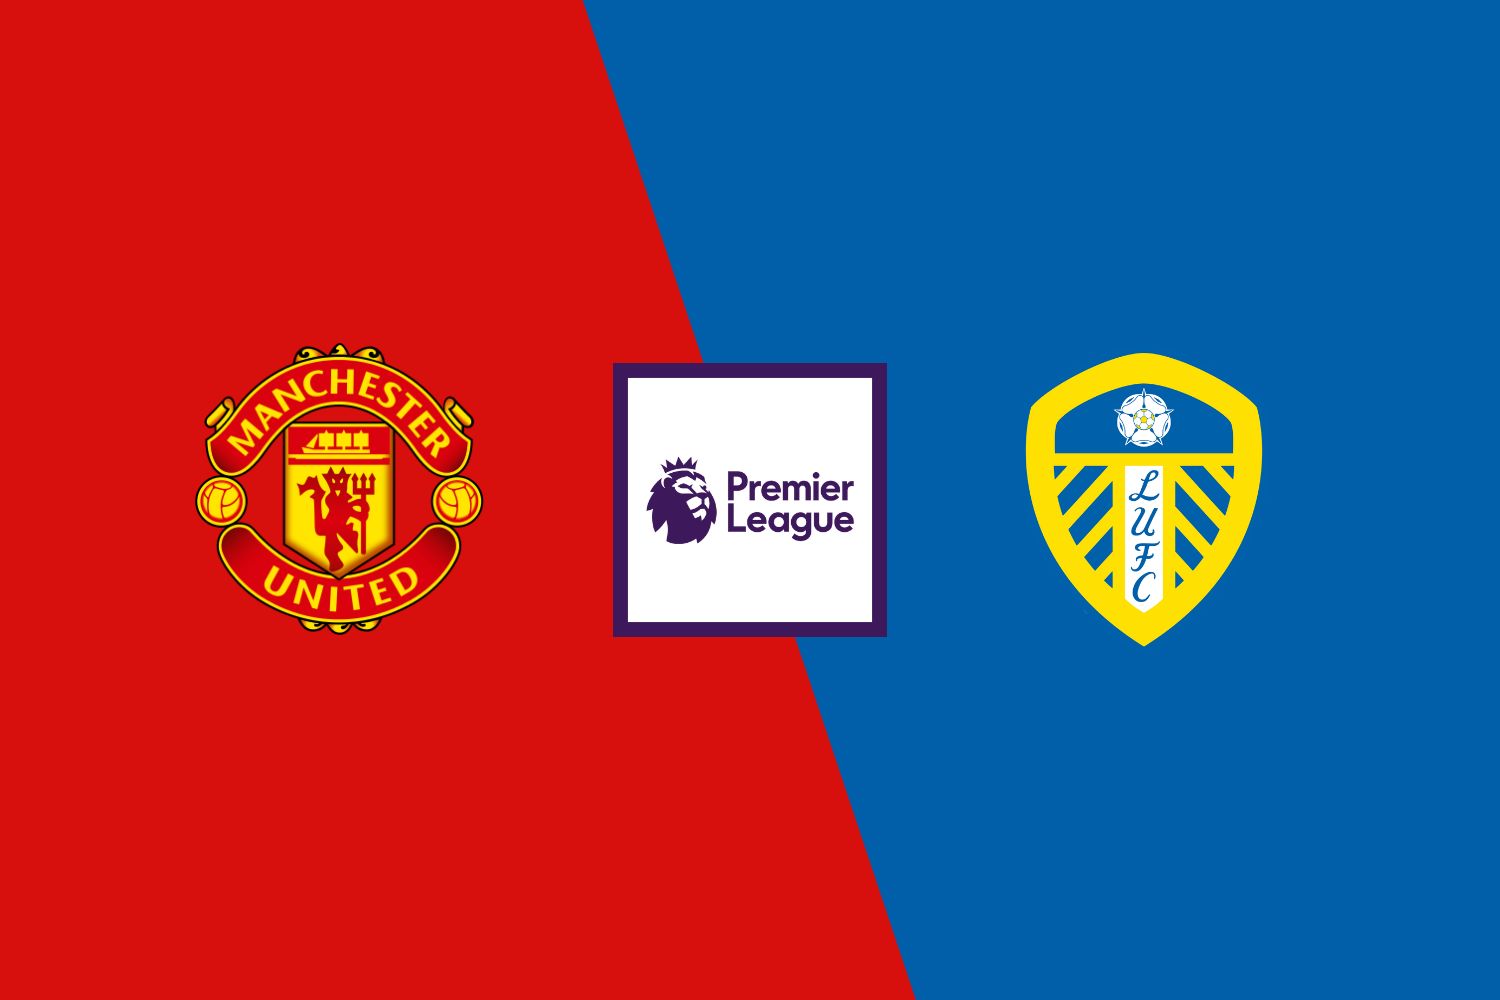 Man Utd vs Leeds prediction, betting tips, odds, preview